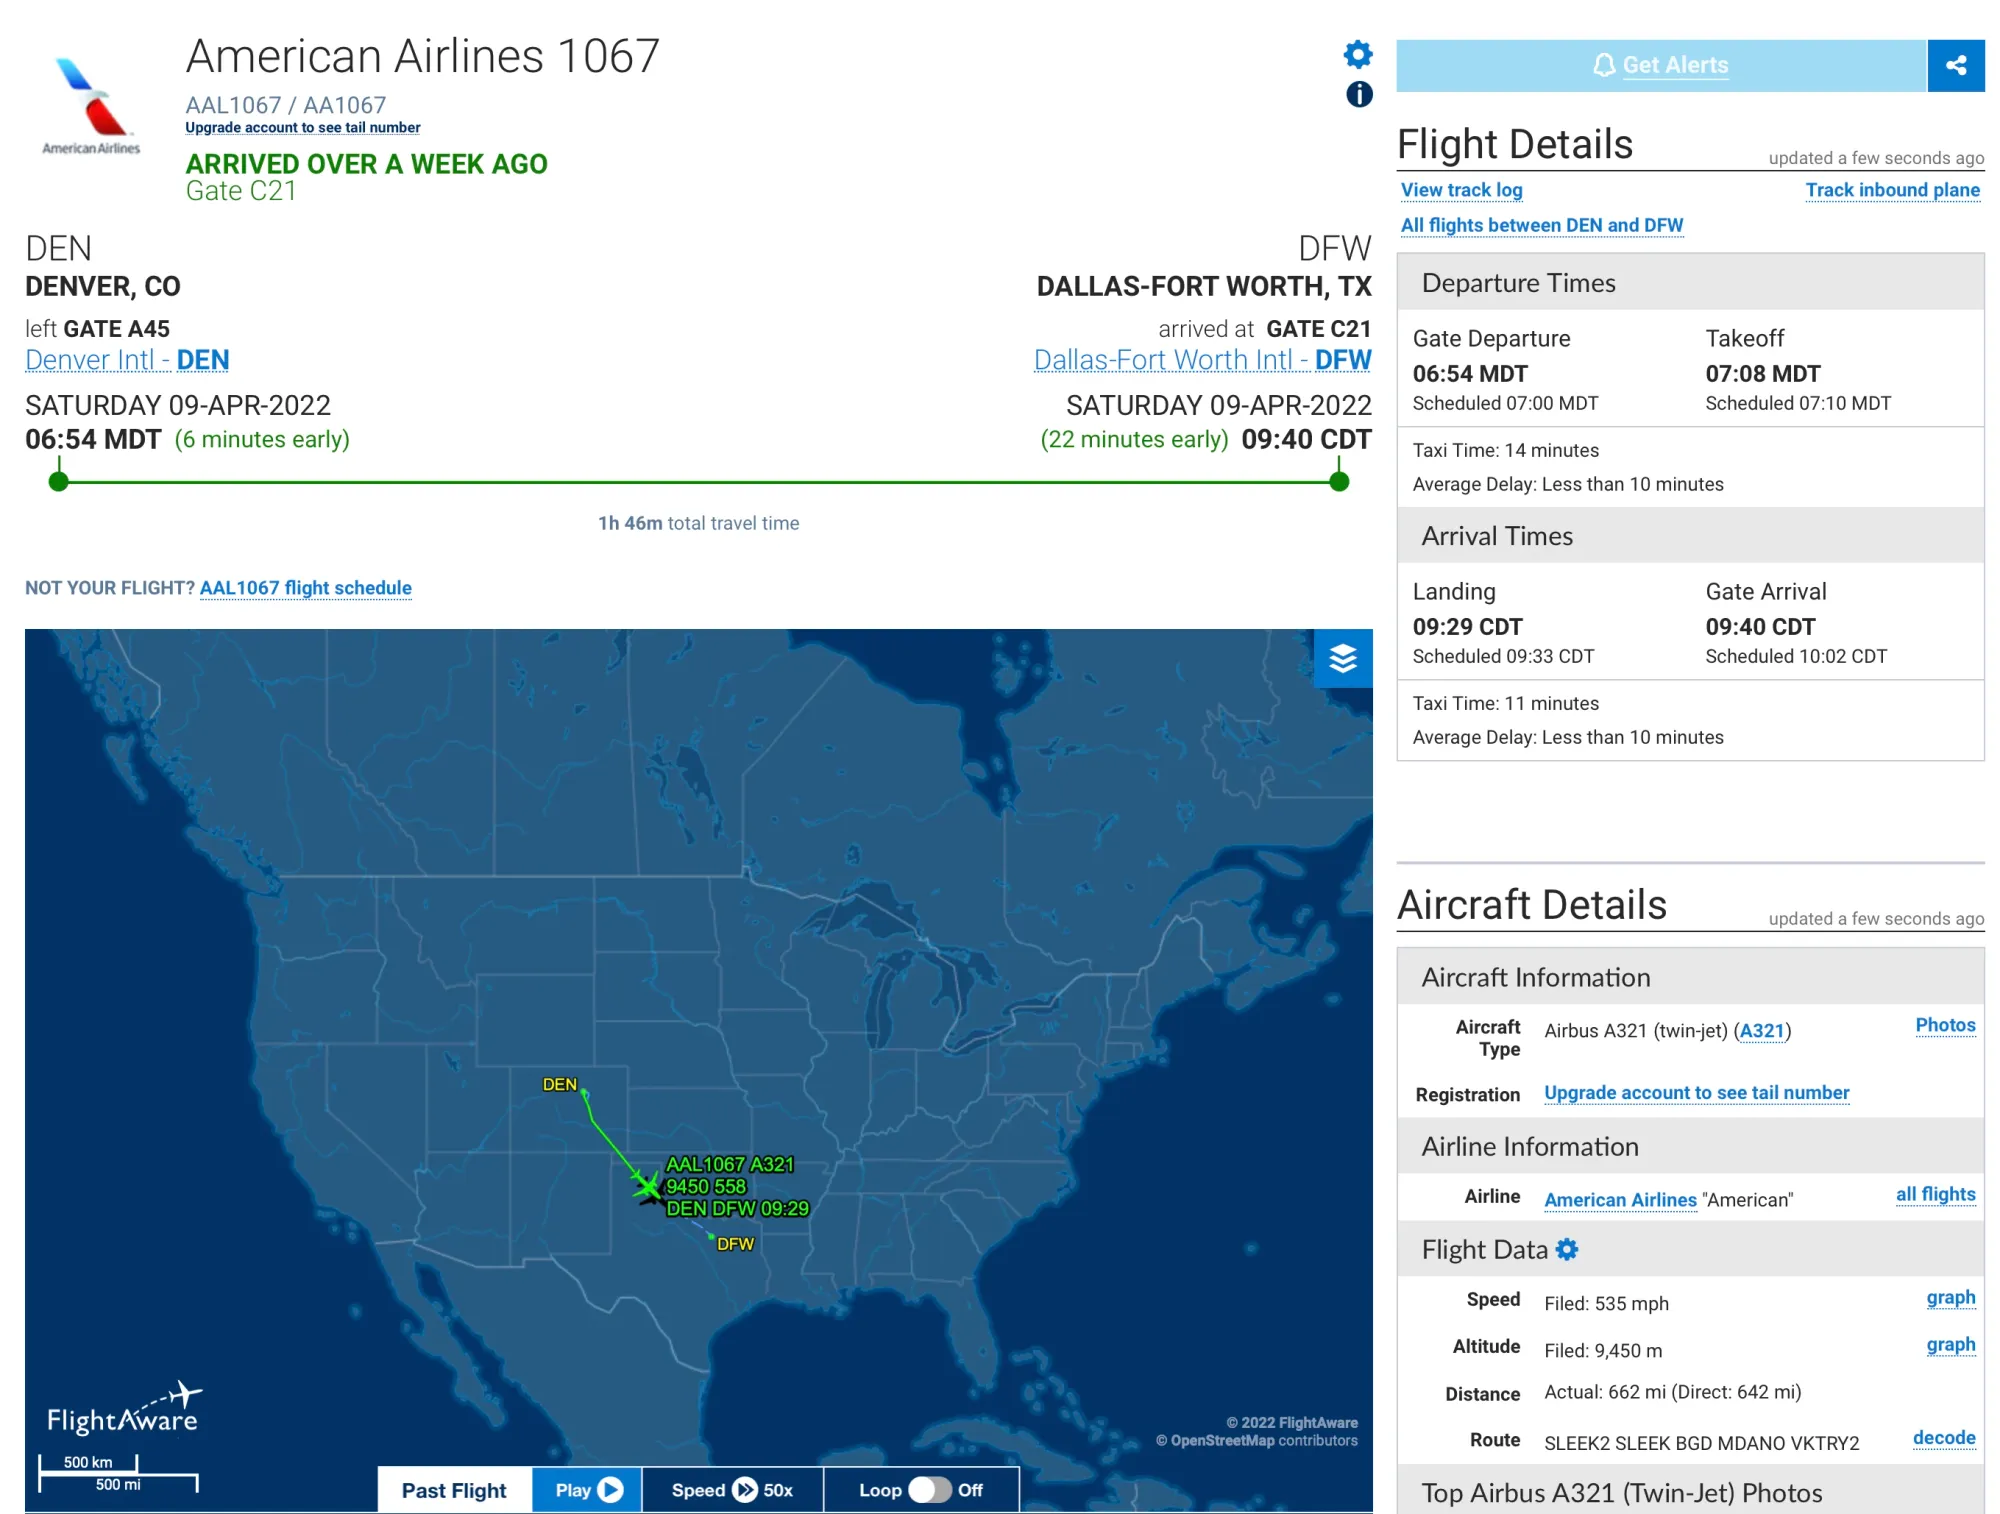 American Airlines flight AAL1067 from Den to DFW: FlightAware